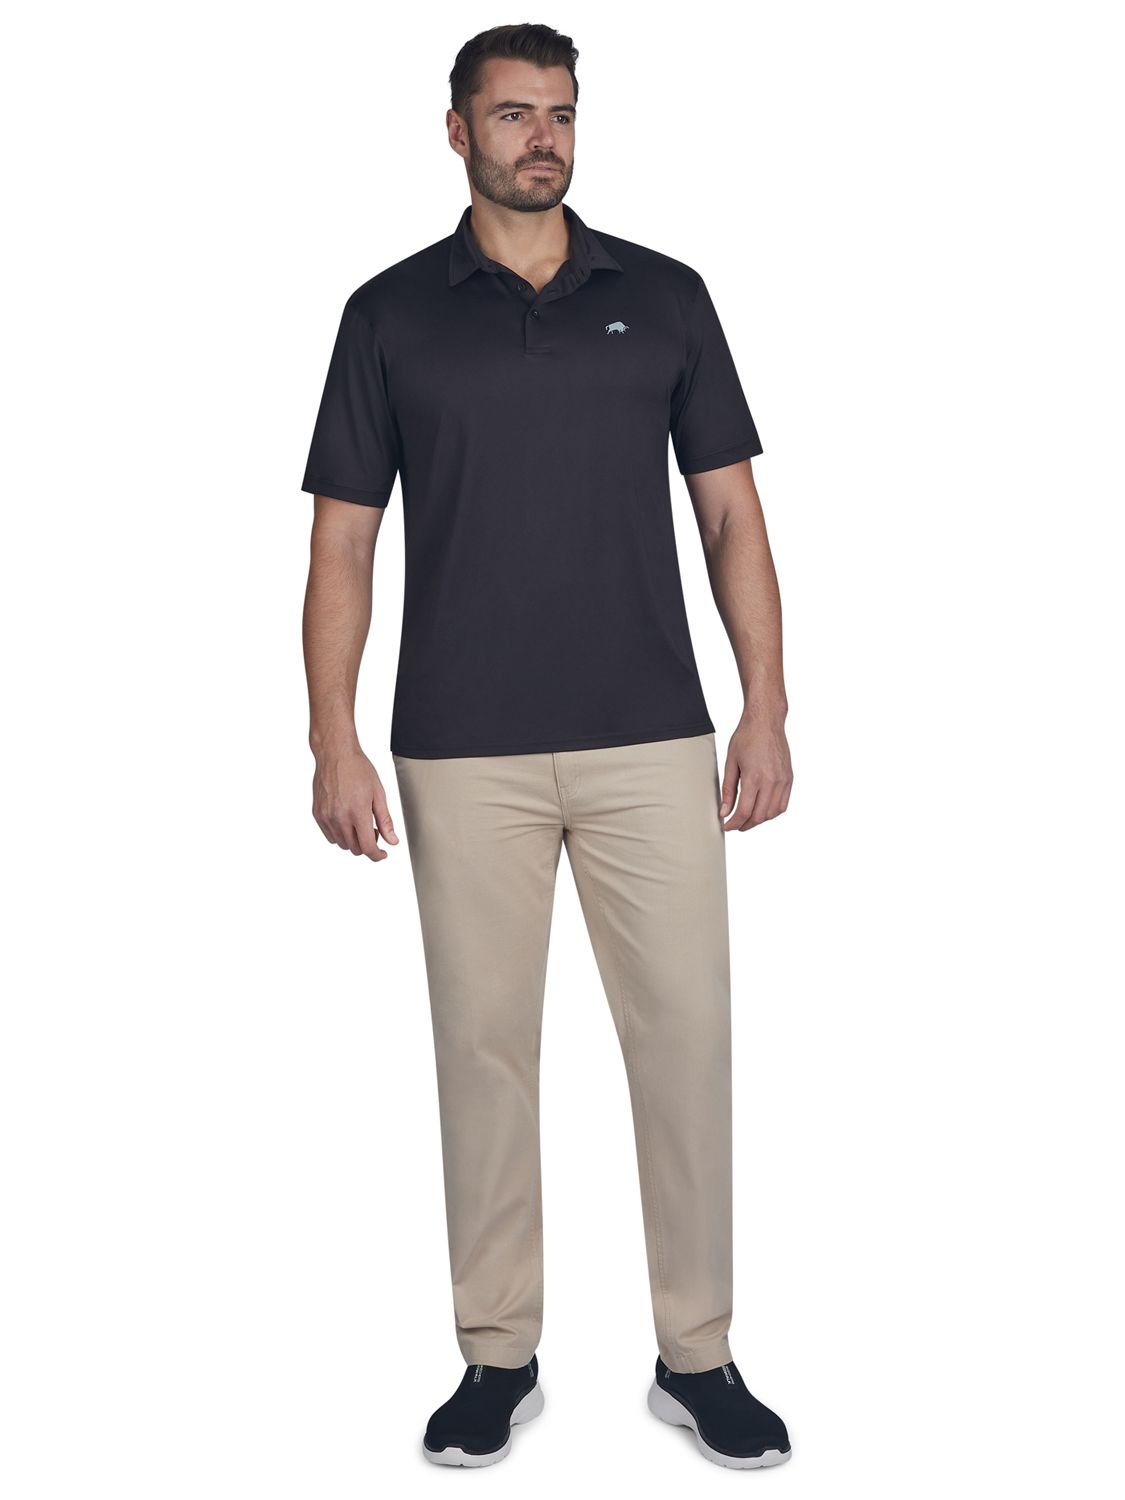 Raging Bull Golf Tech Polo Shirt, Black, S